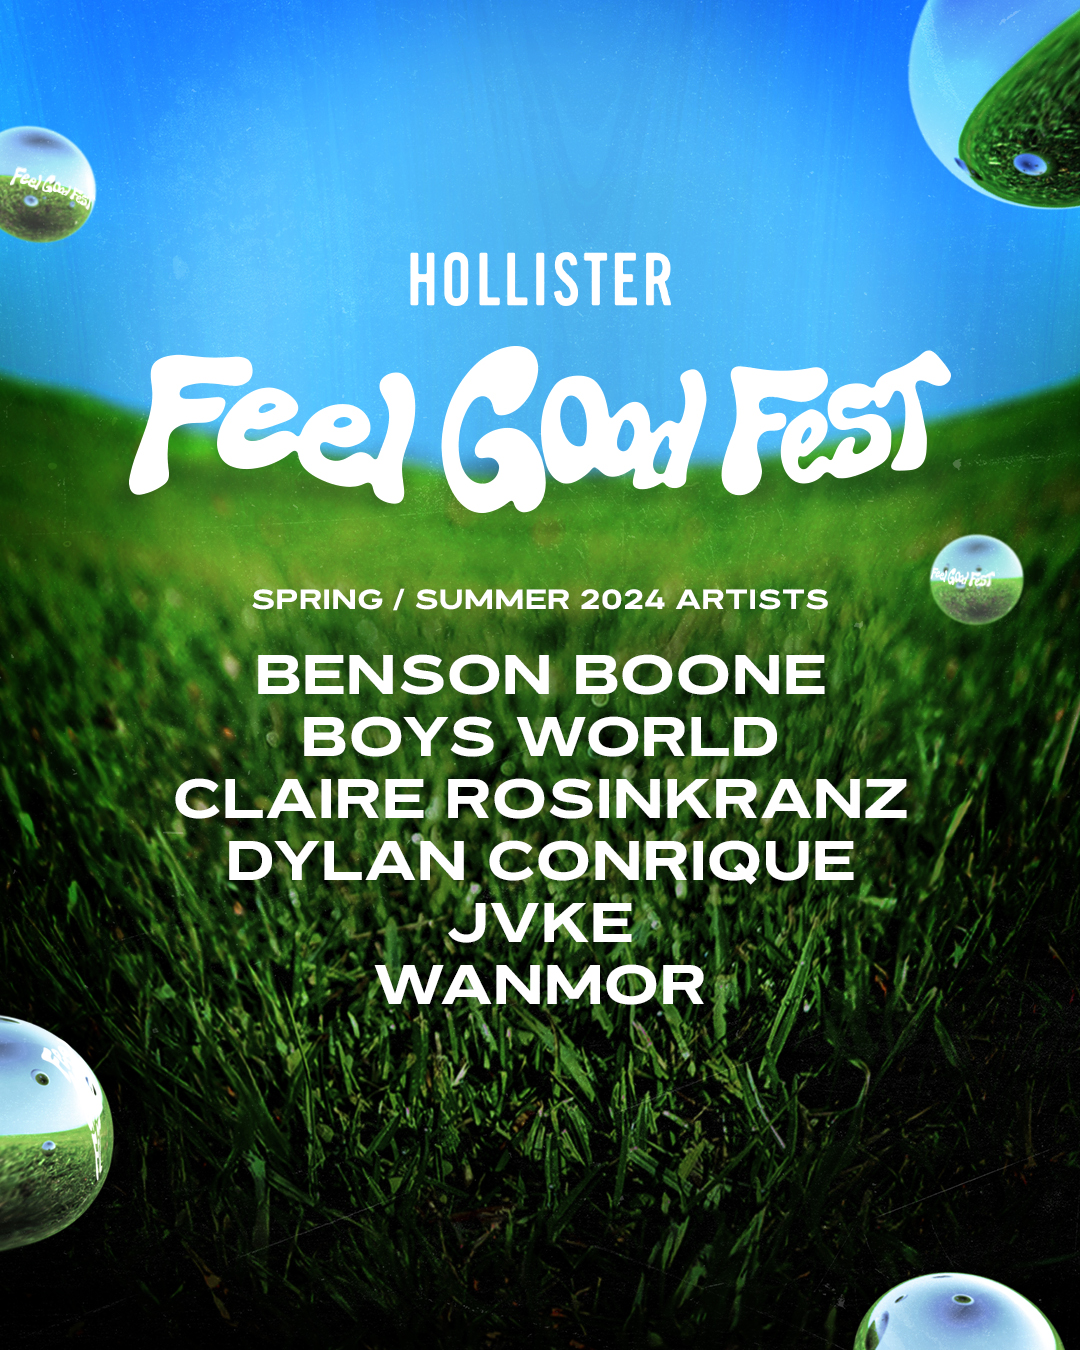 Hollister Co. launches its Feel Good Fest Music Program.